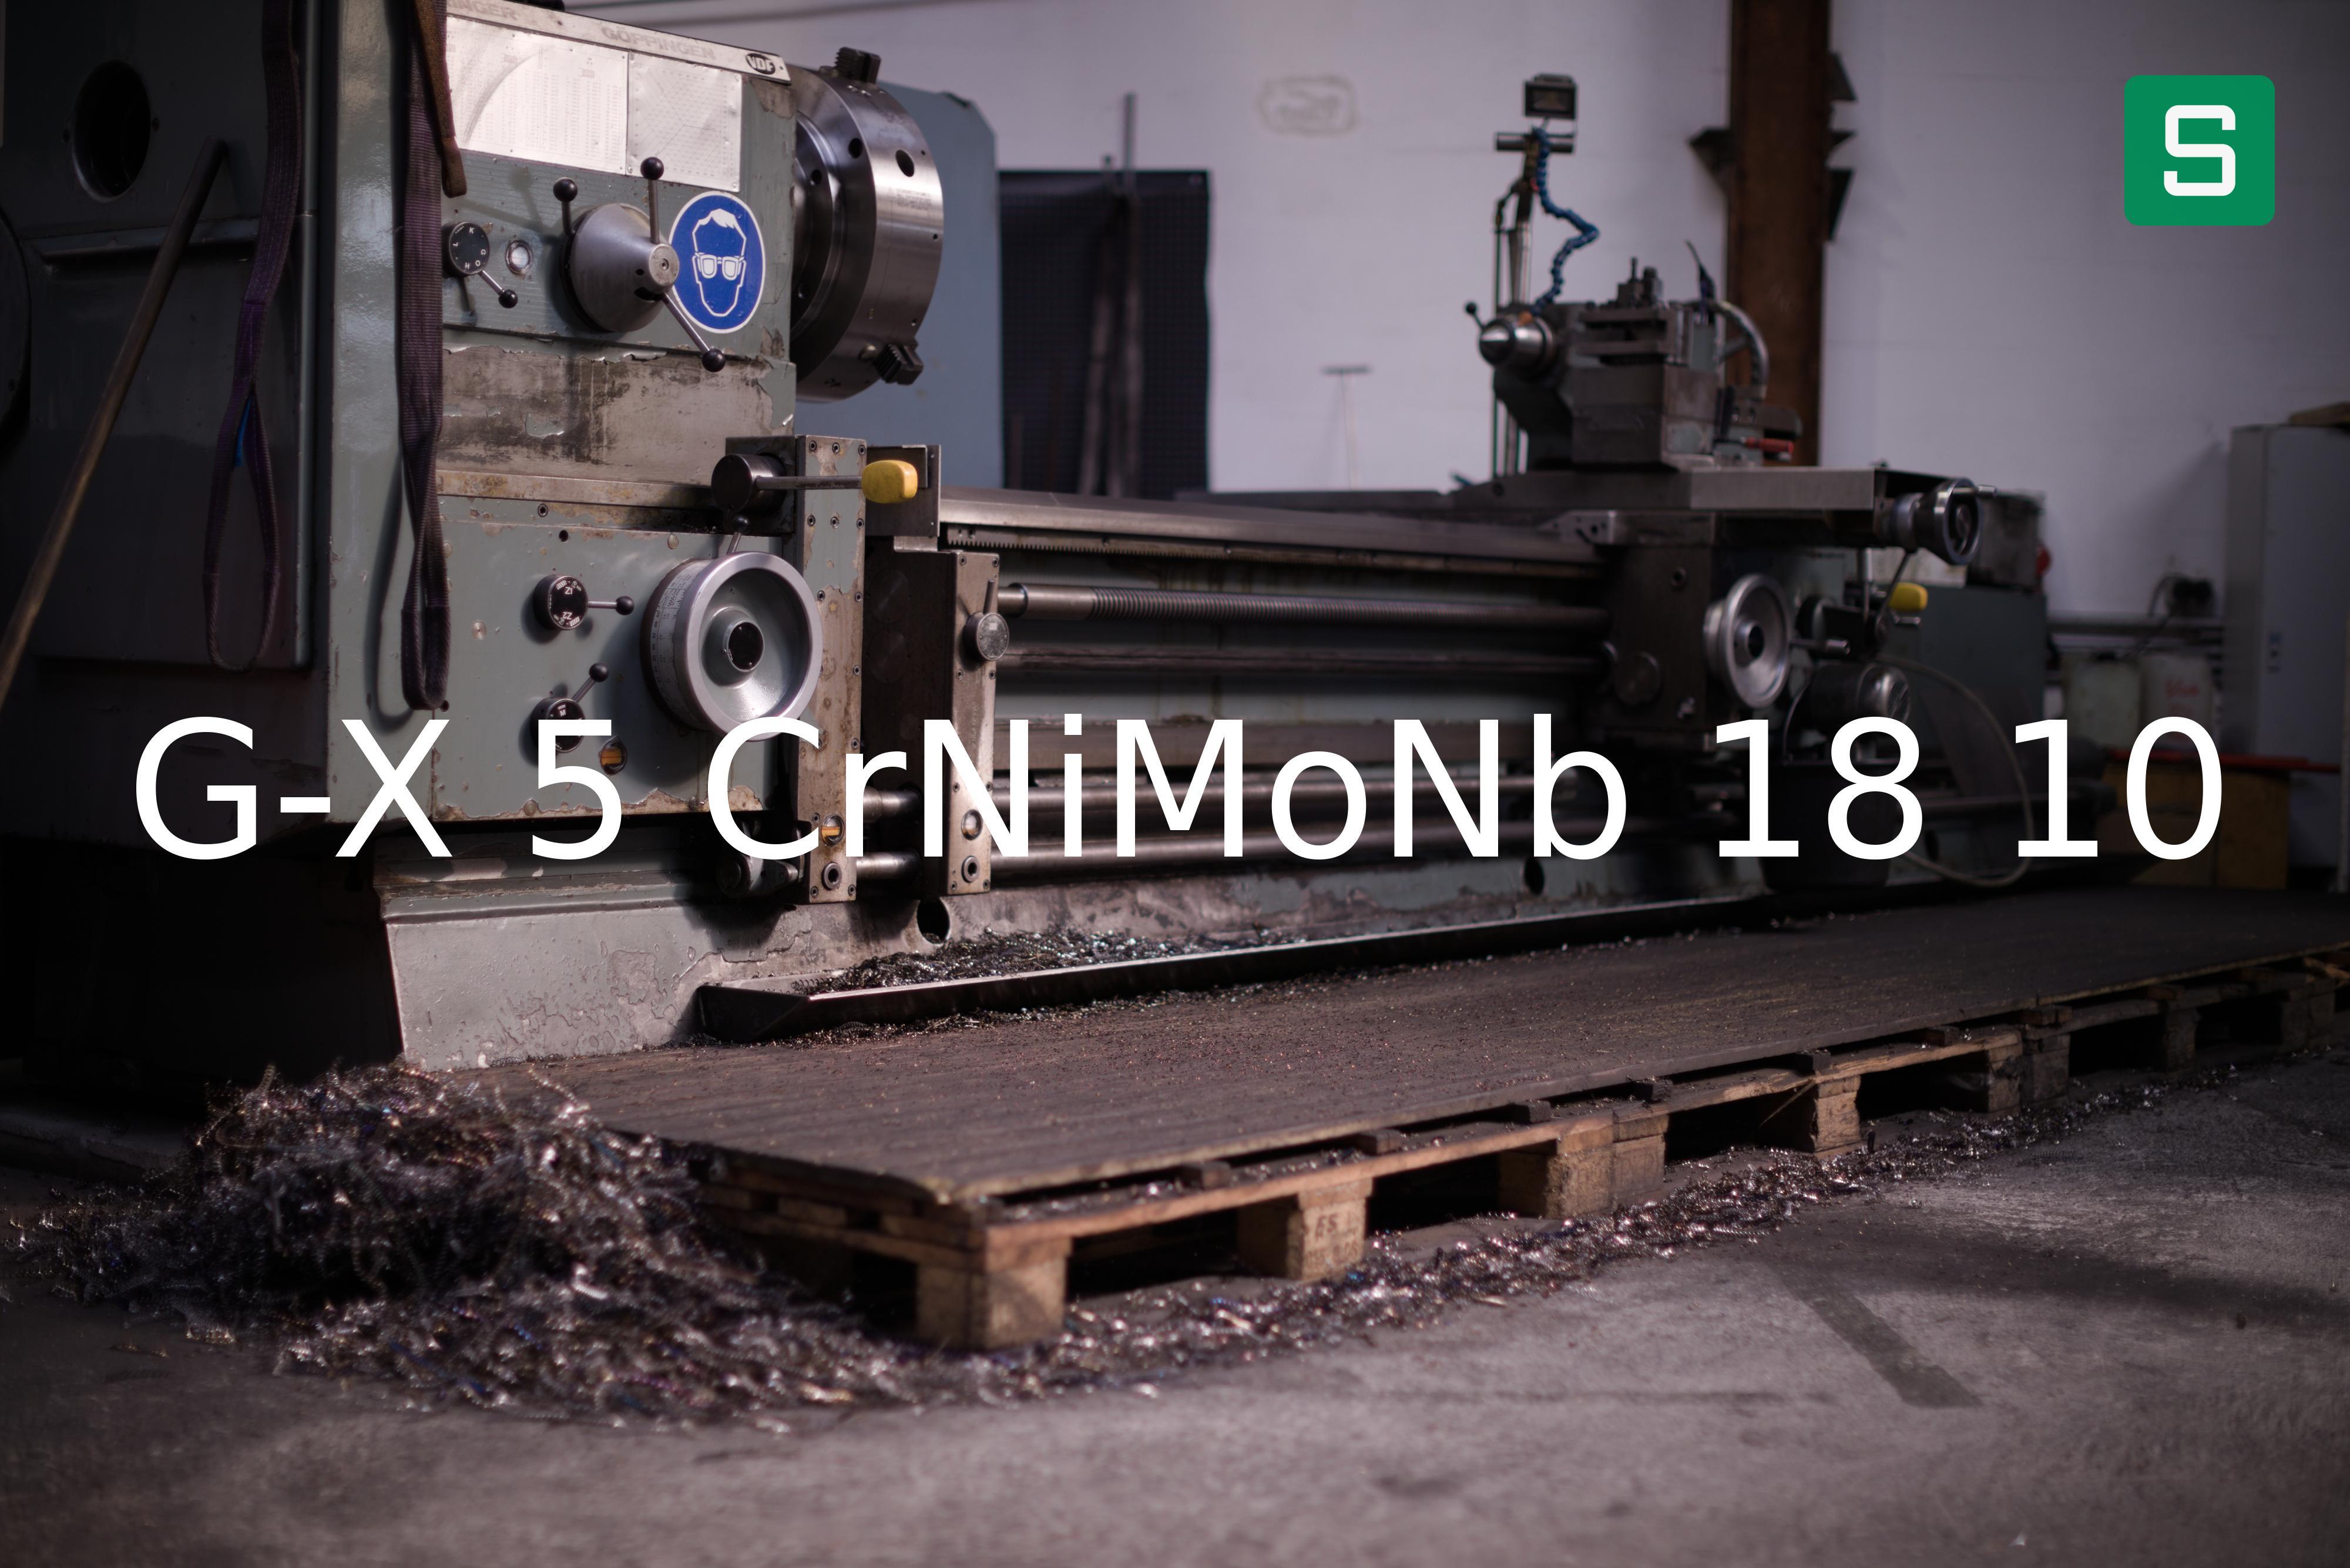 Steel Material: G-X 5 CrNiMoNb 18 10